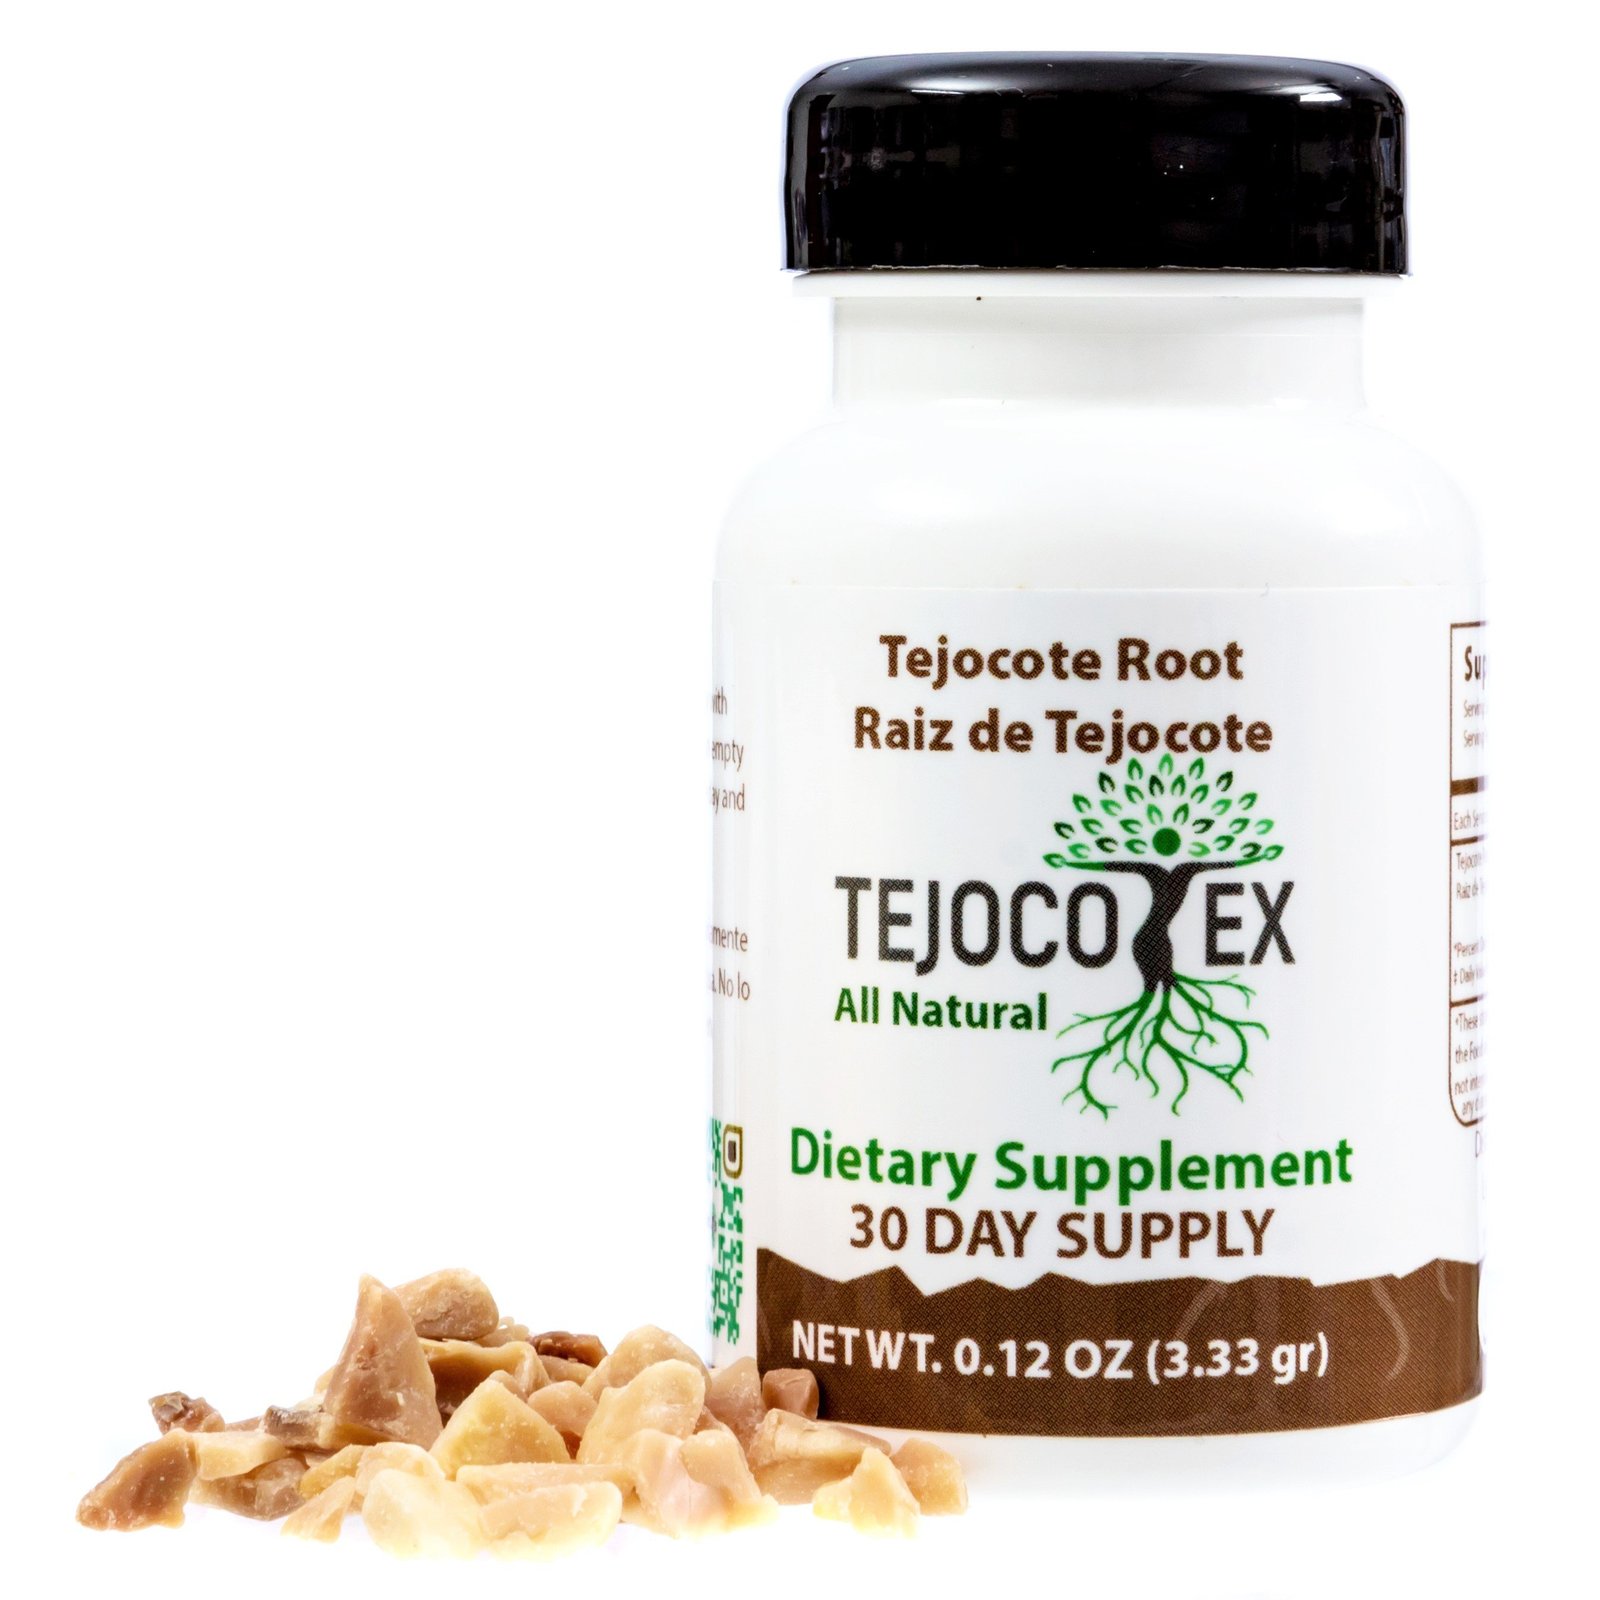 Tejocotex Raiz de Tejocote Root Supplement Alipo Tecojote 100% Pure Authentic